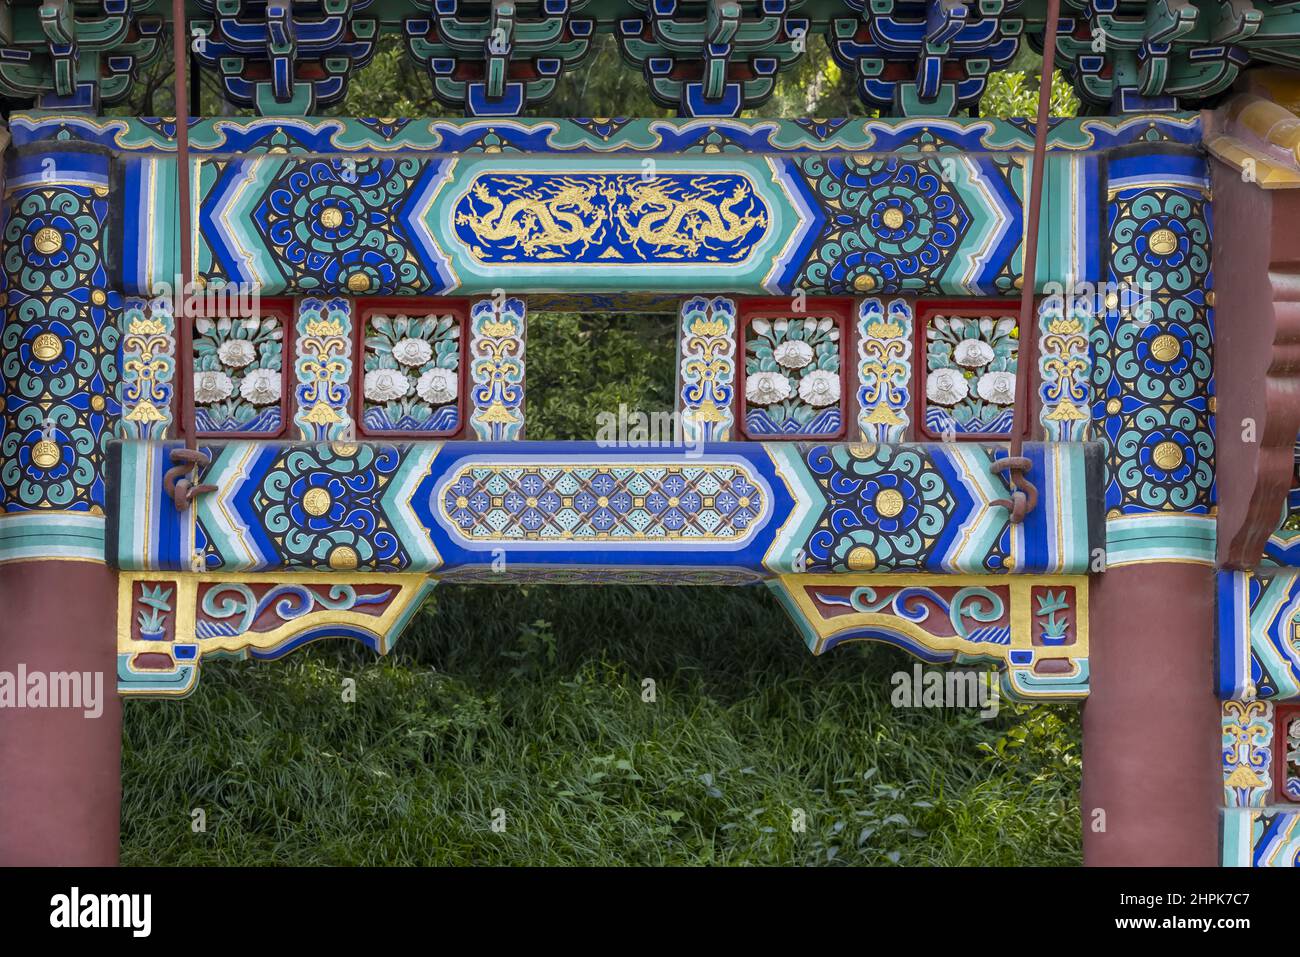 Beijing beihai Park - Weise Perle Tempel Gedenkbogen - lokale Blumenbrett Stockfoto